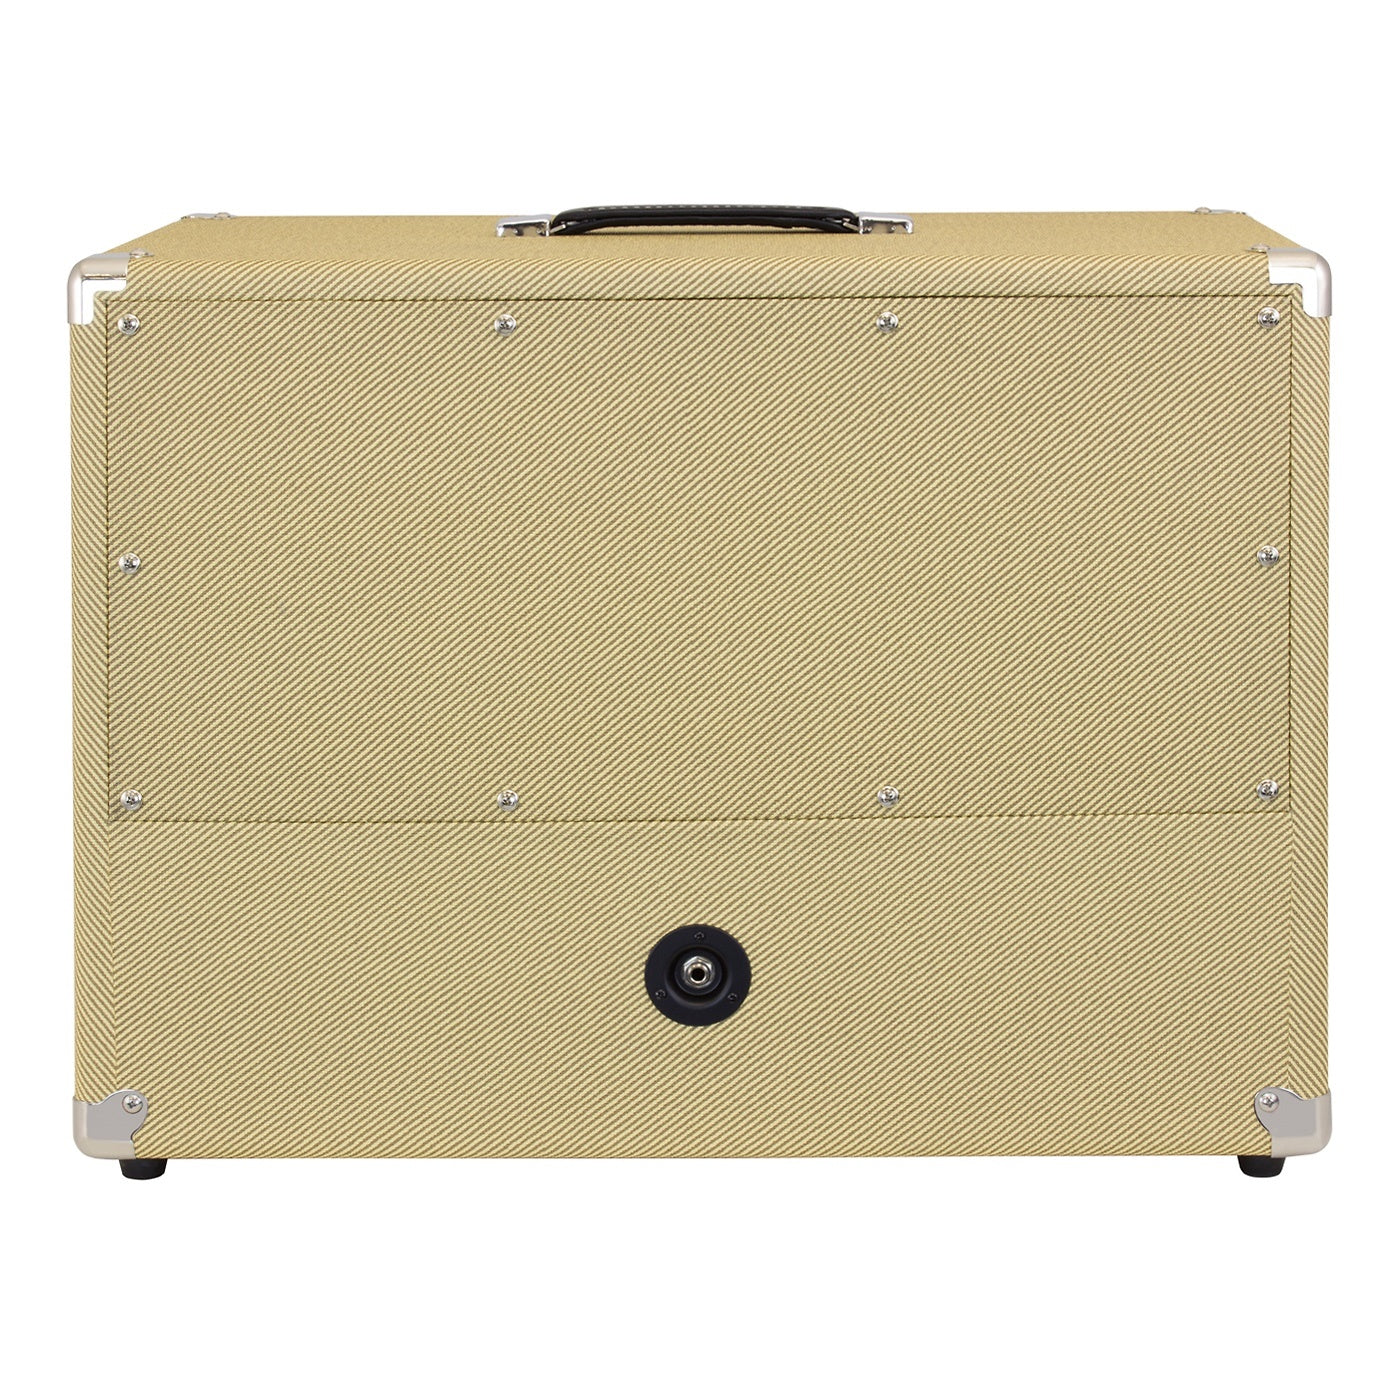 Peavey 112-C Guitar Speaker Cabinet (60 Watts, 1x12 Inch), 16 Ohms